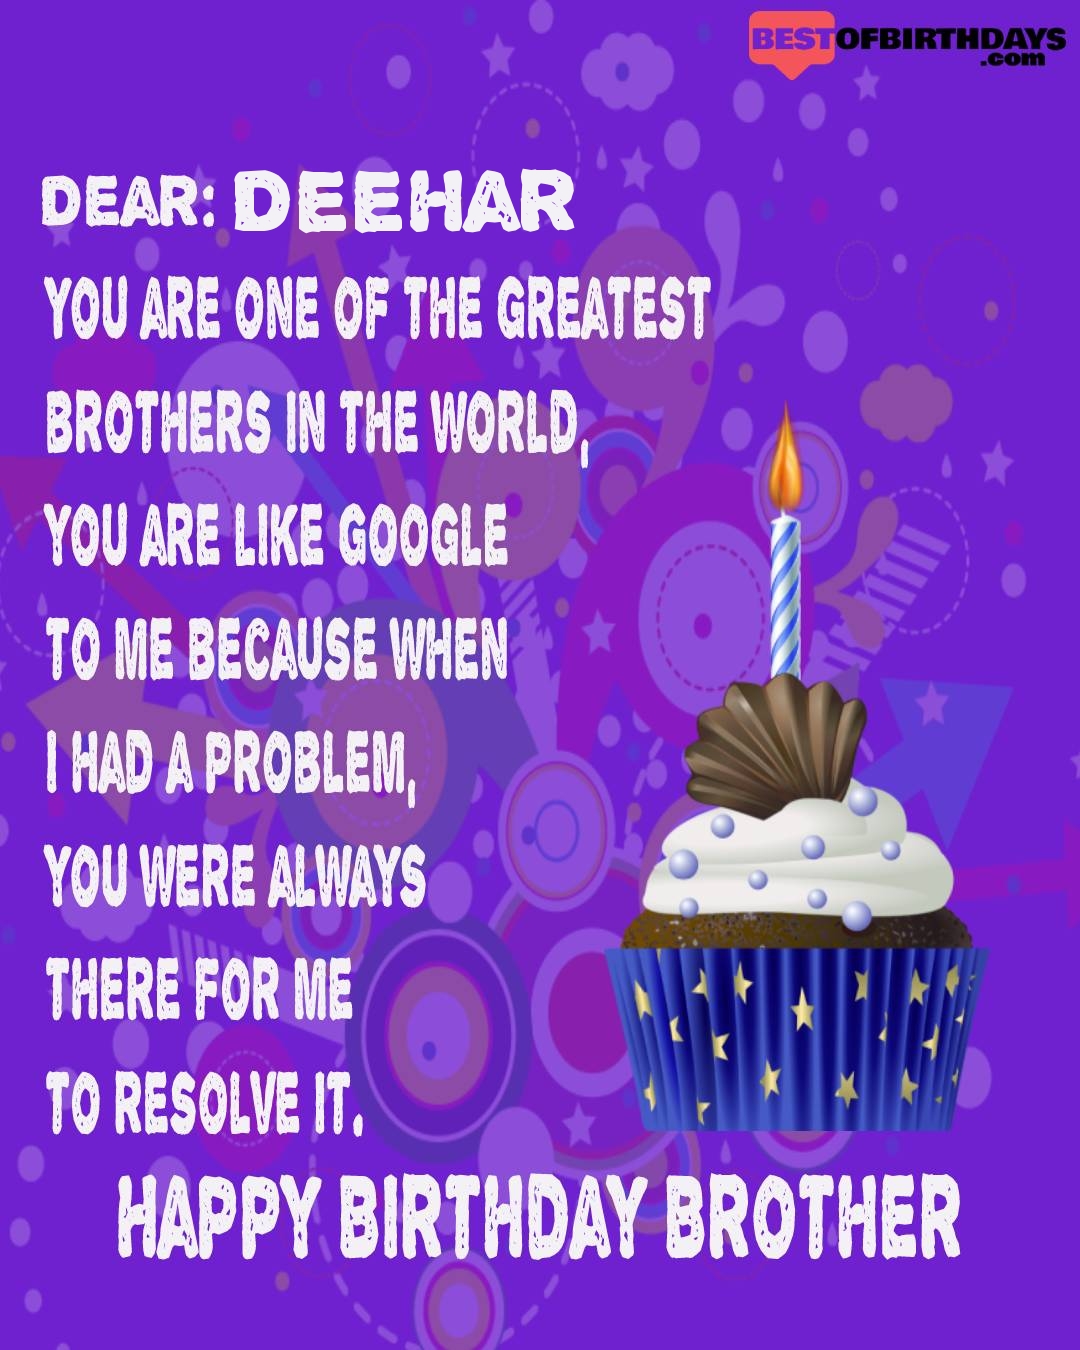 Happy birthday deehar bhai brother bro